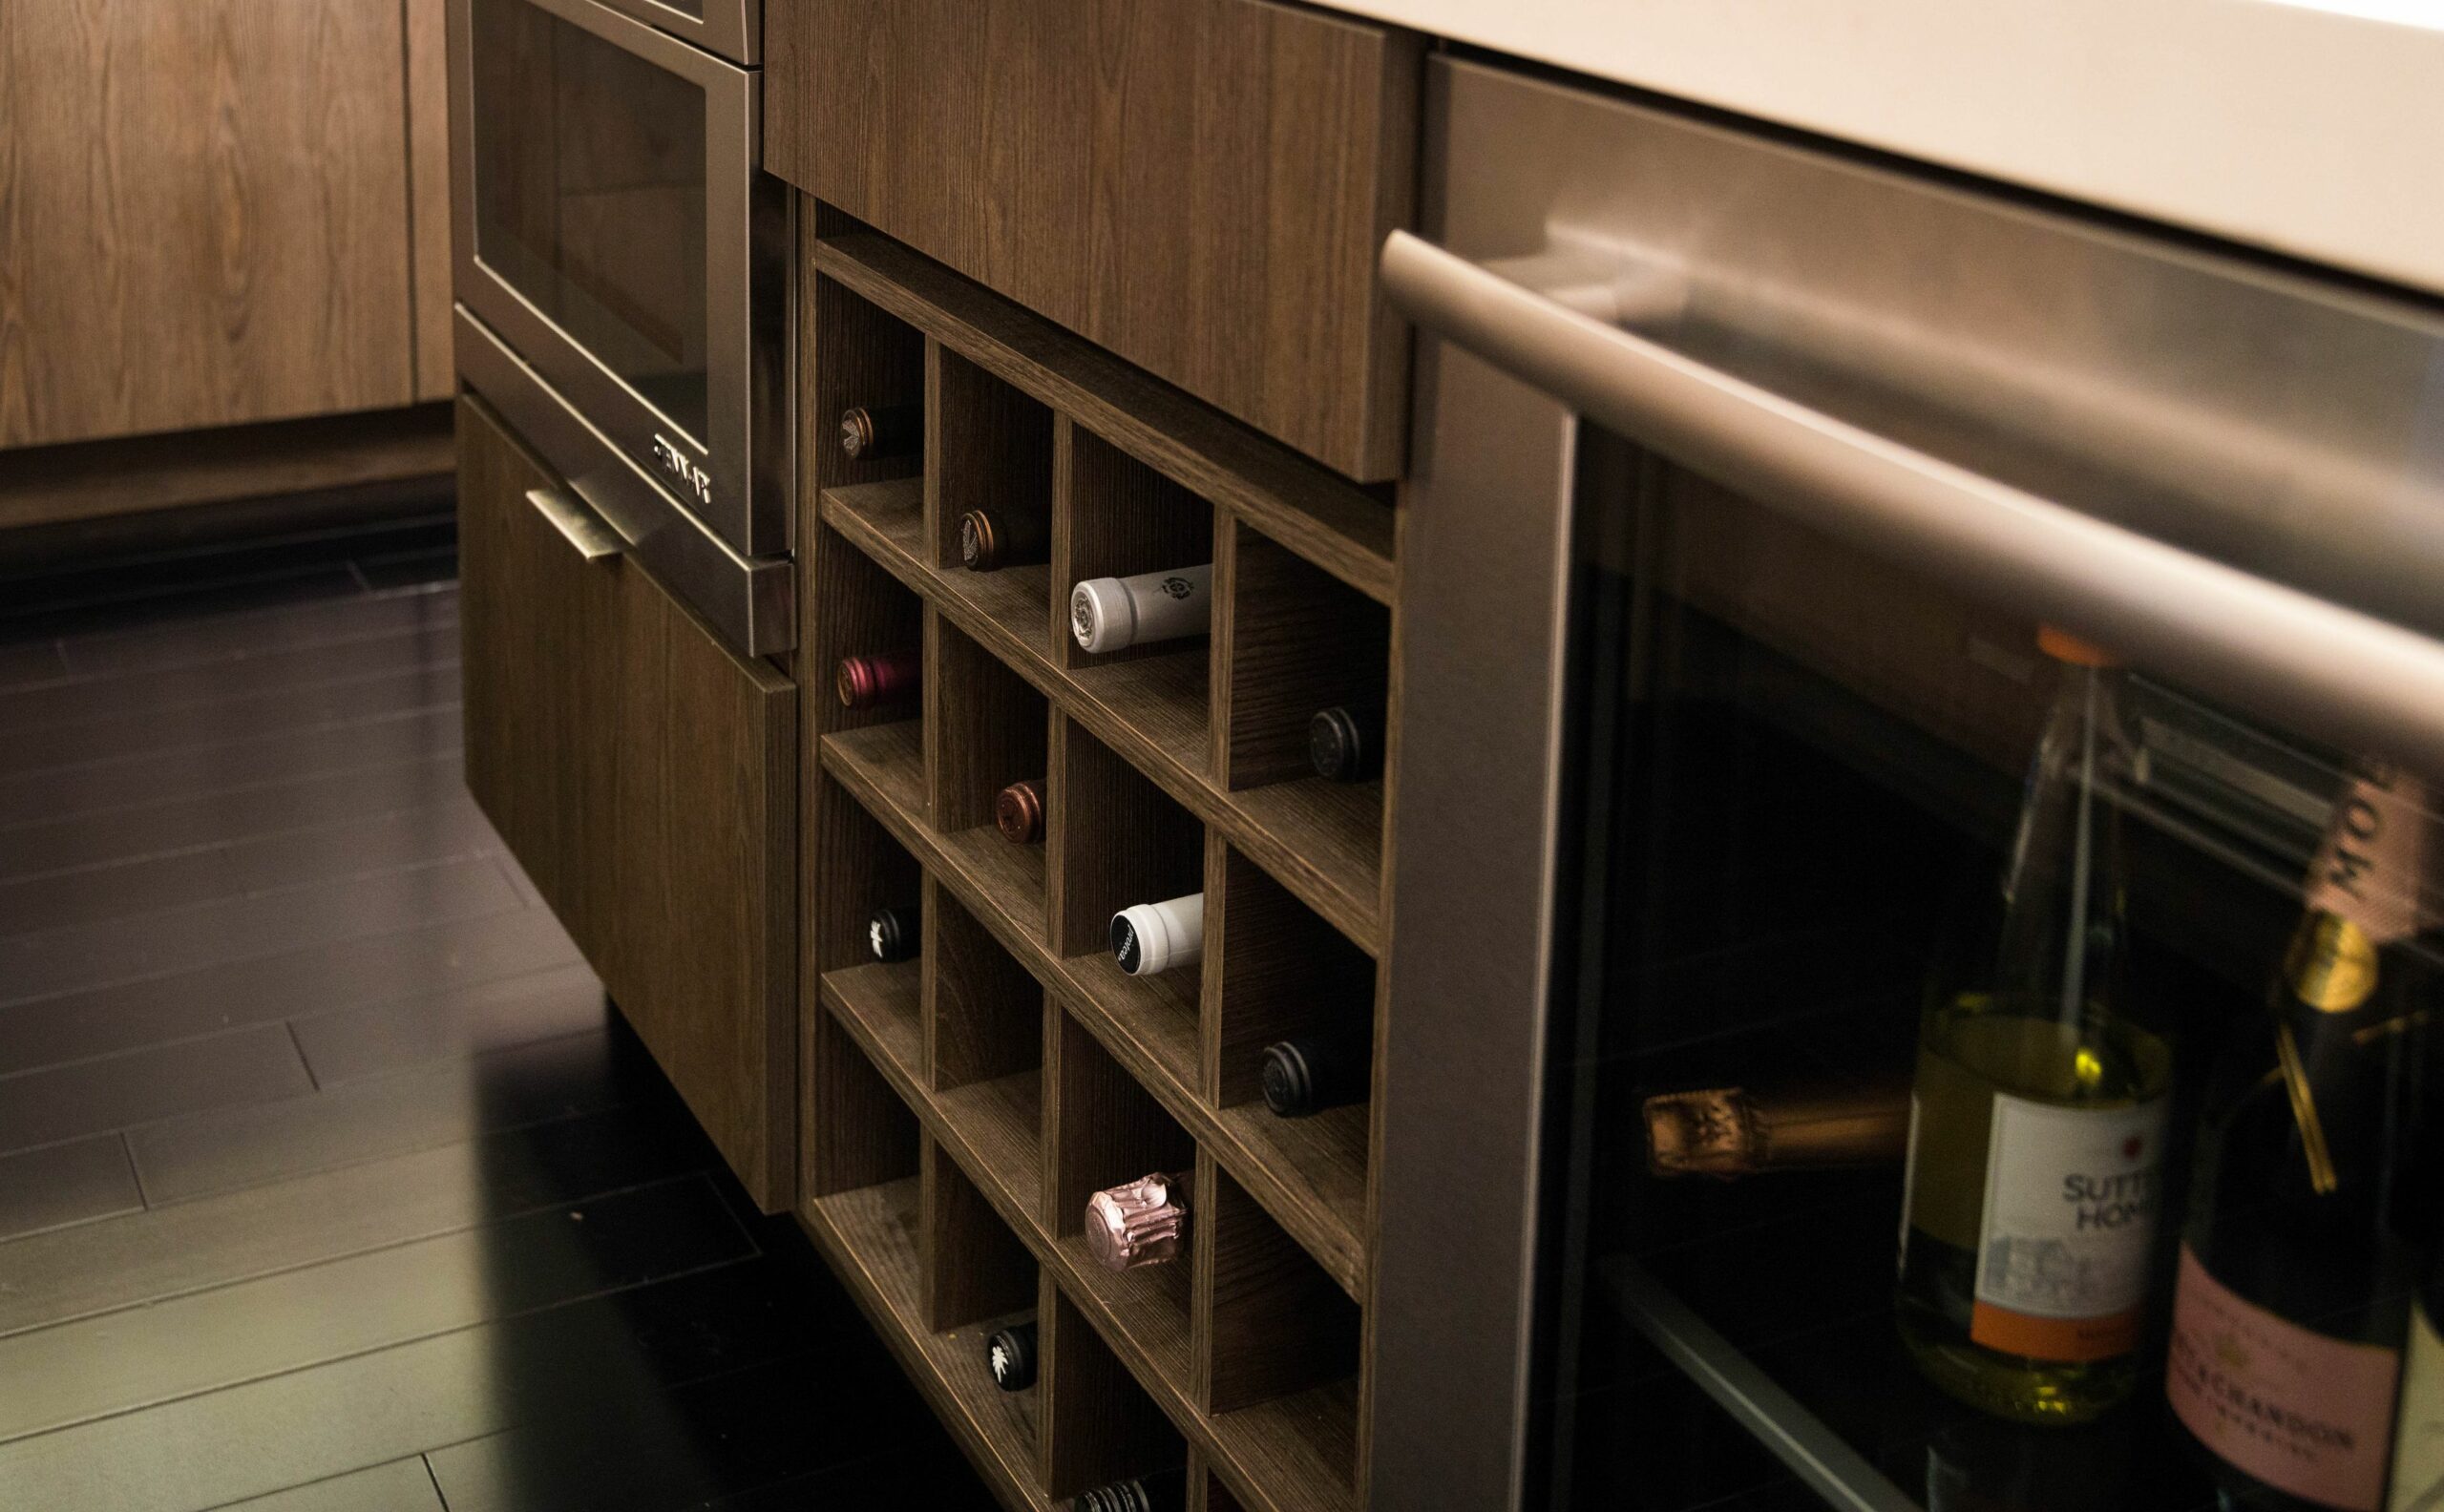 Built-in wine rack beside modern oven in kitchen.